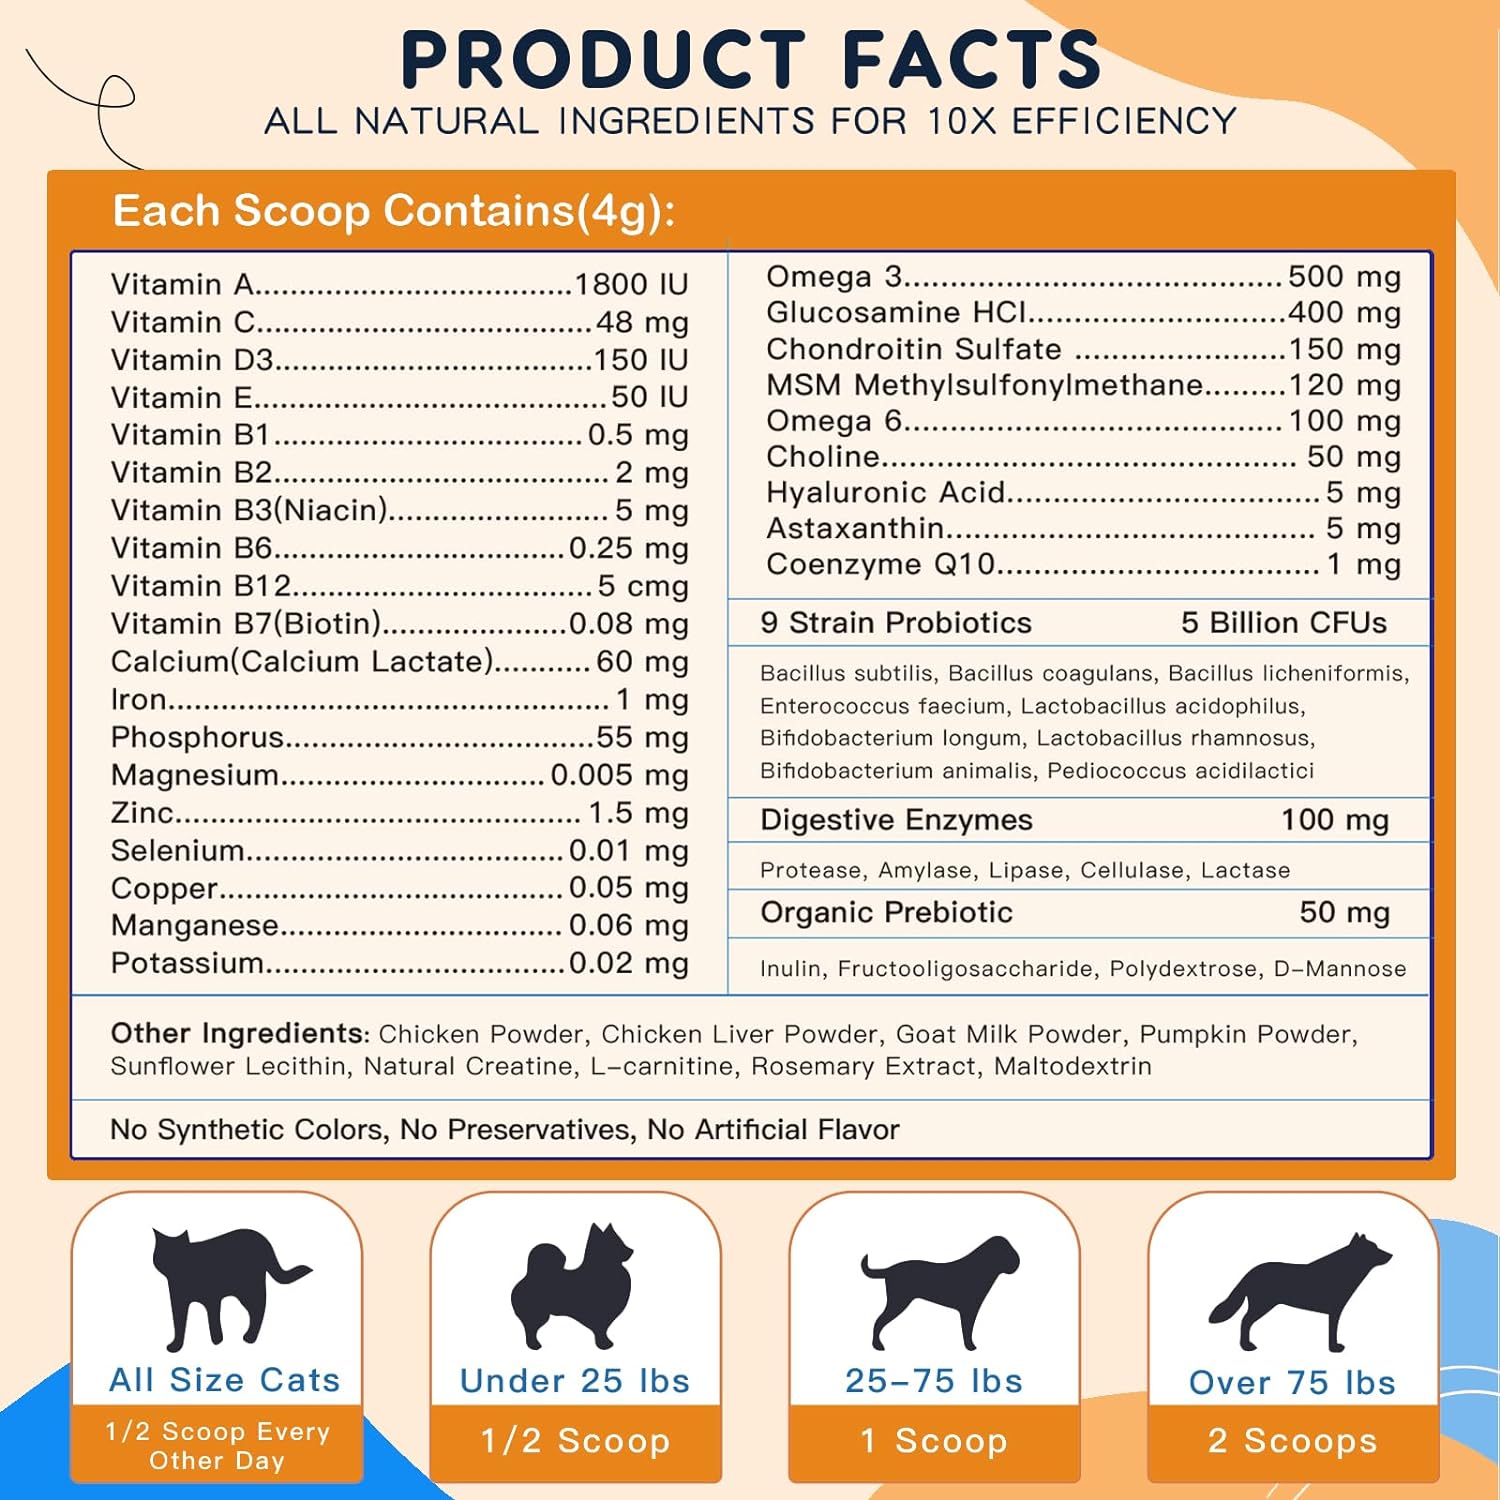 Zebora Dog Multivitamin Powder with Glucosamine